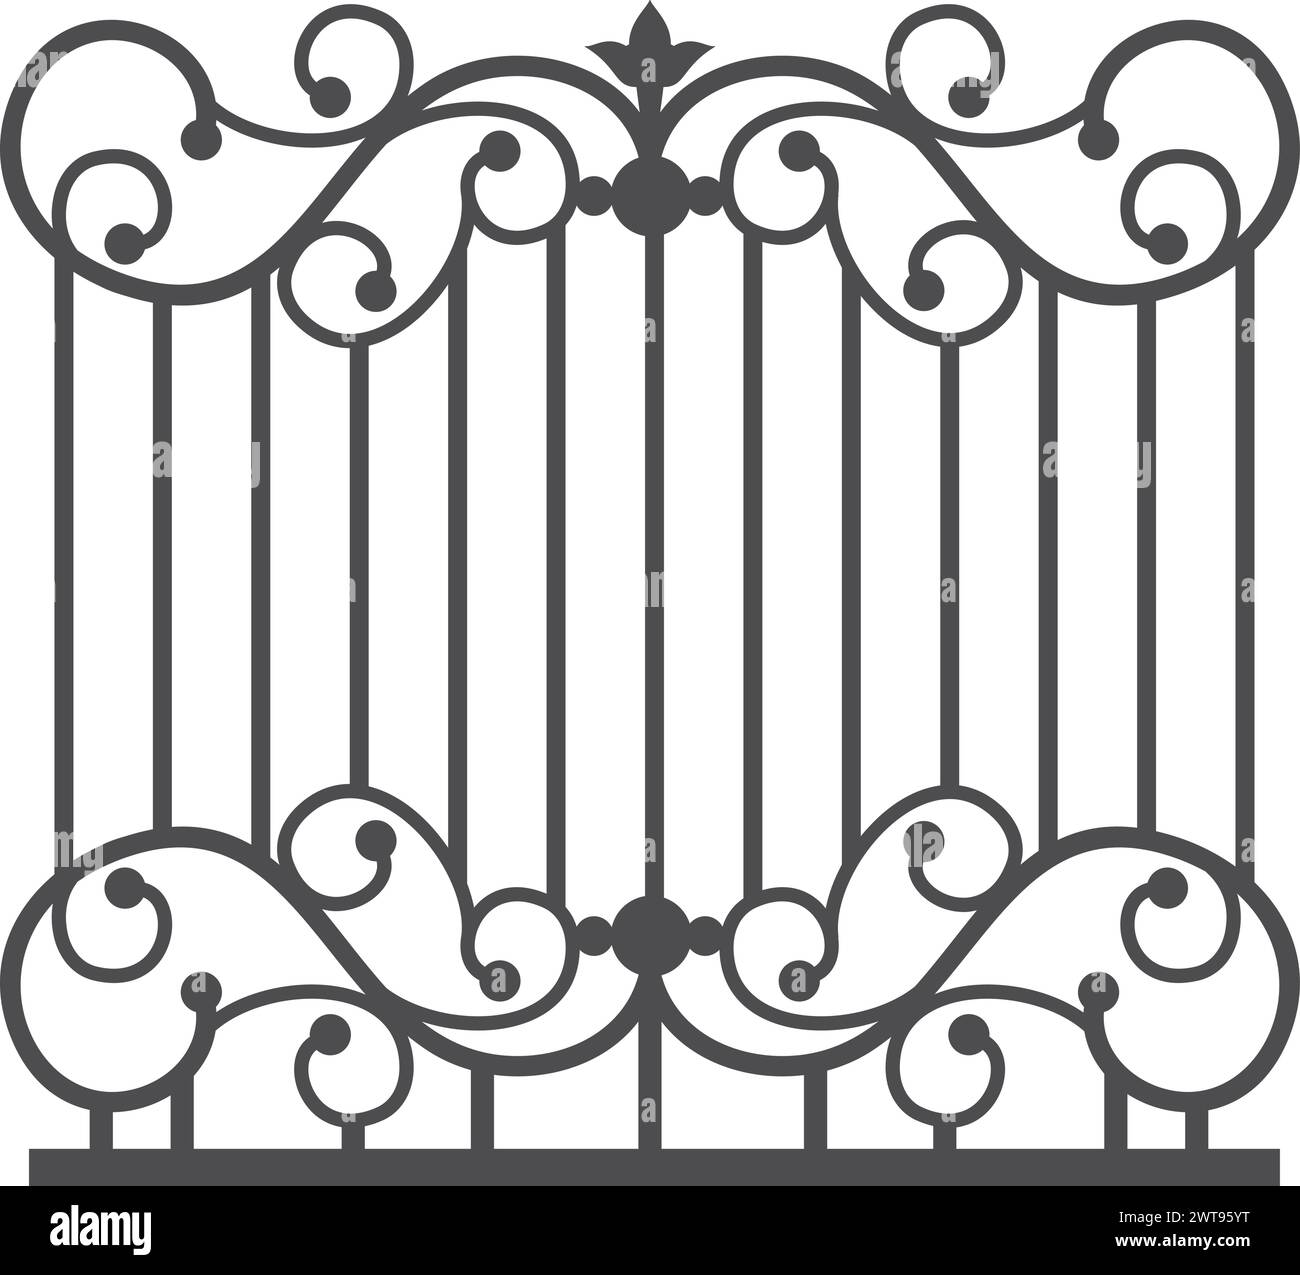 Decorative iron gate. Ornate black vintage fence Stock Vector